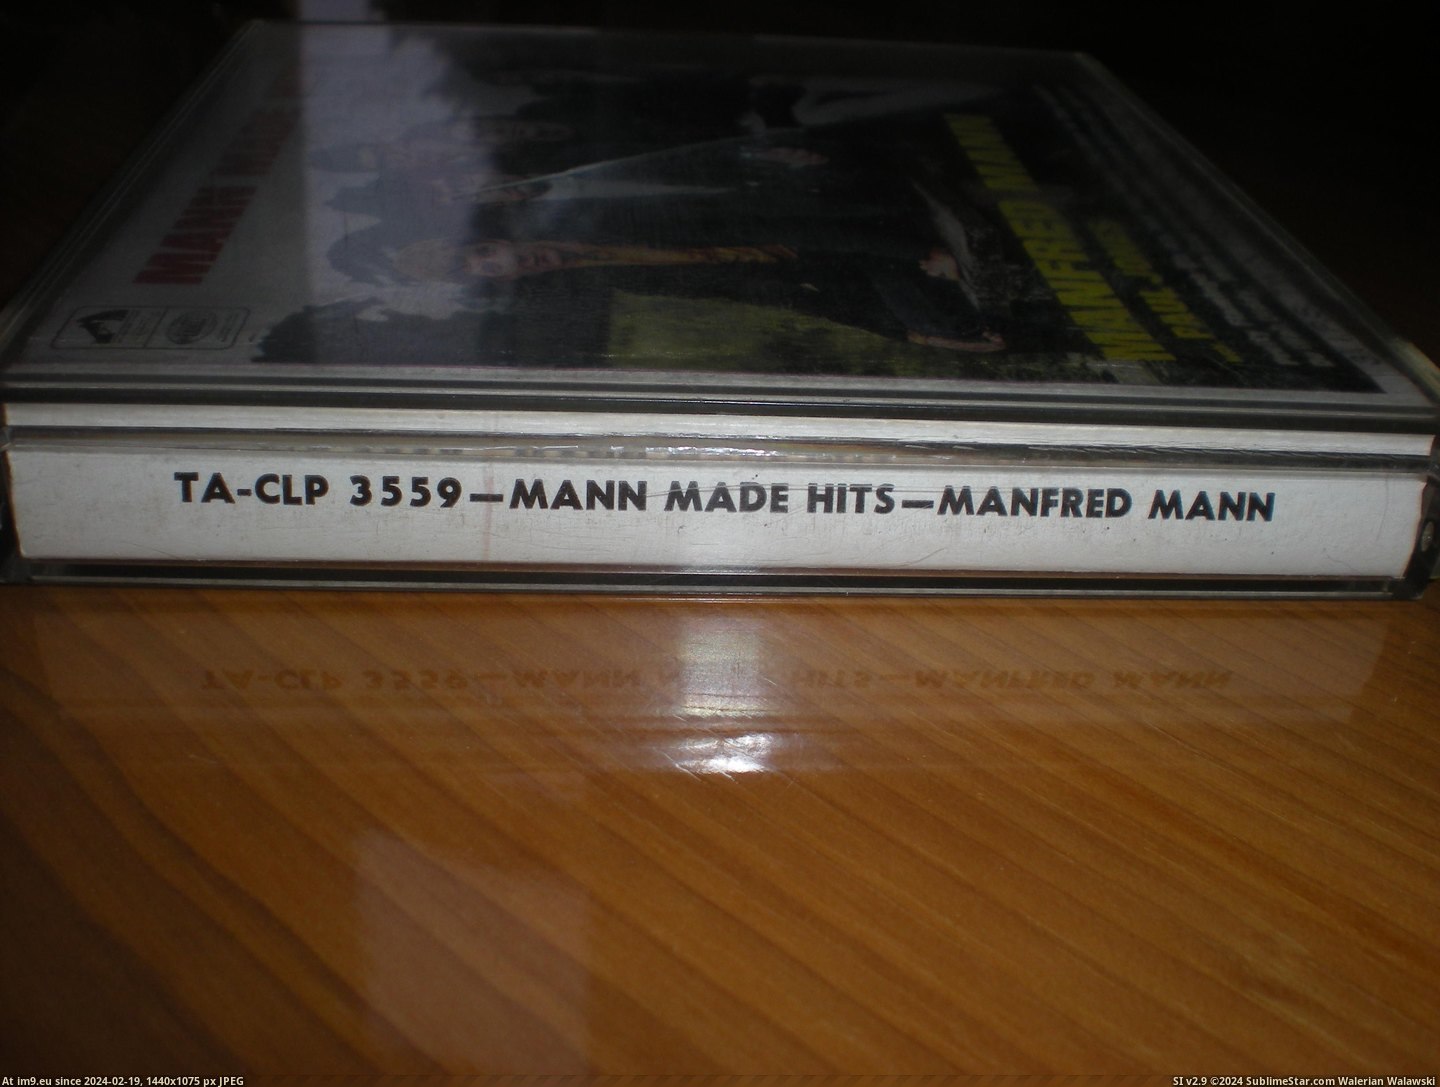 #Reel #Manfred #Mann Manfred Mann reel 2 Pic. (Изображение из альбом new 1))